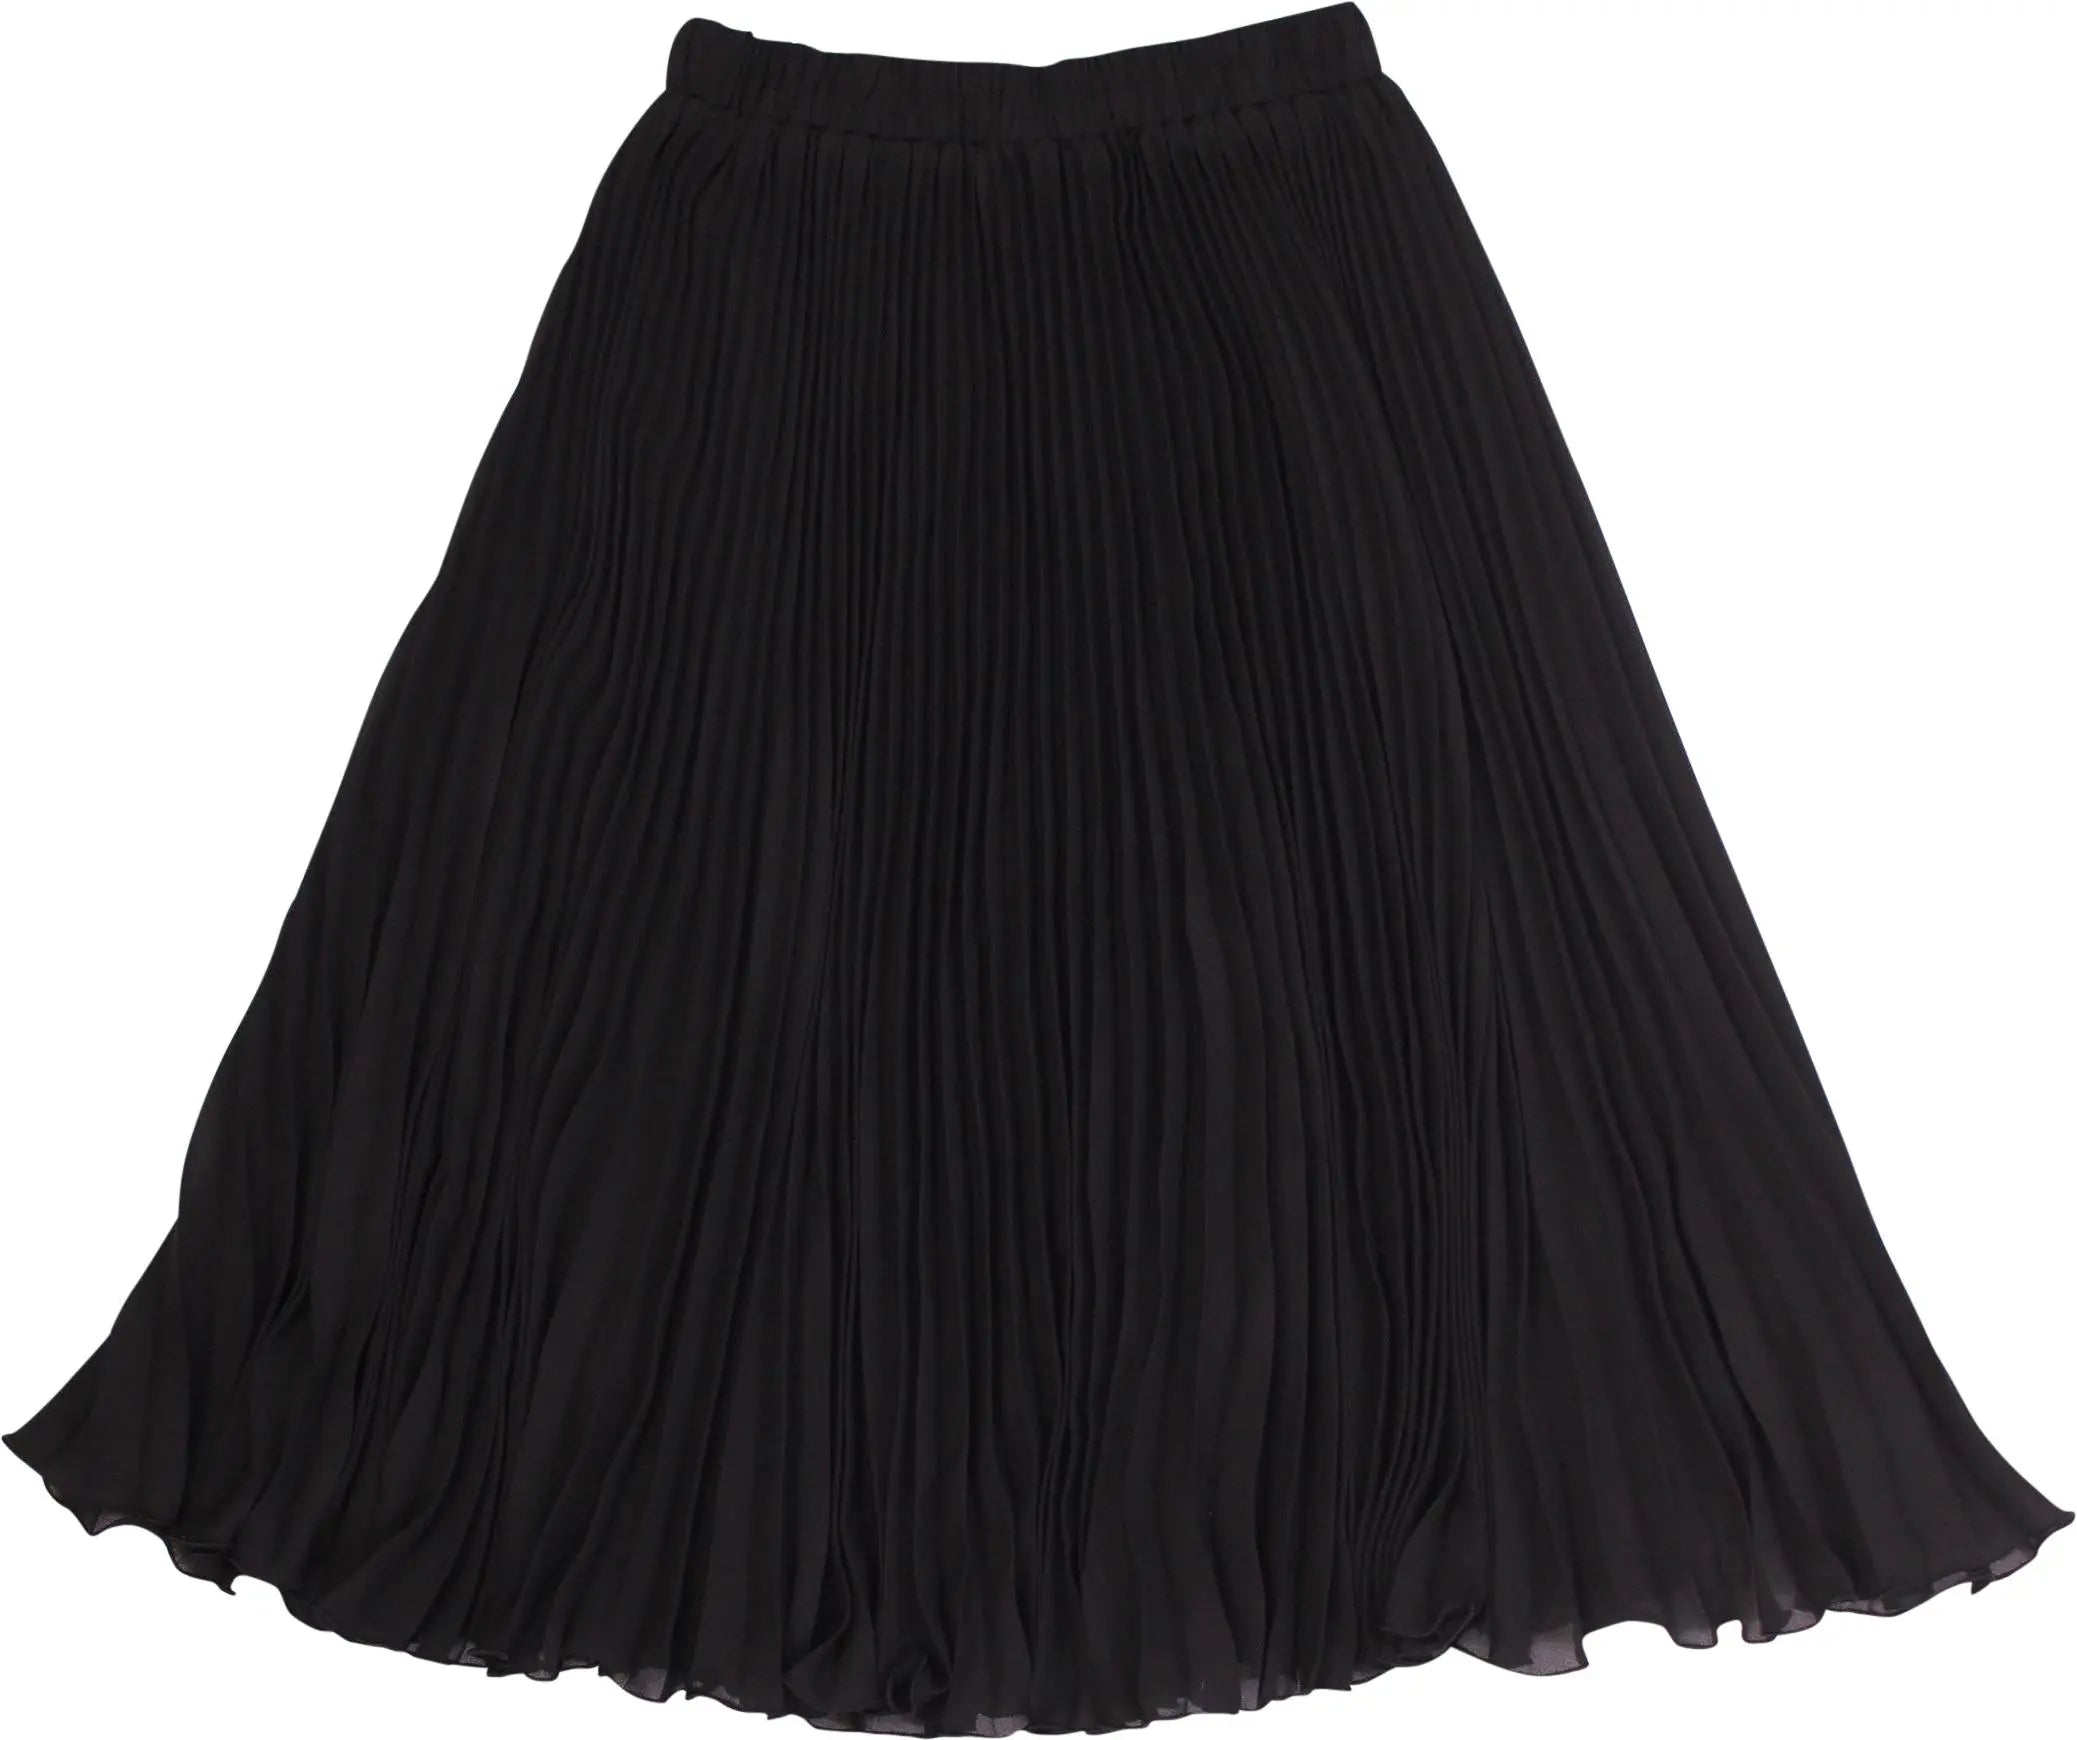 Luisa Spagnoli - Black Pleated Skirt by Luisa Spagnolia- ThriftTale.com - Vintage and second handclothing